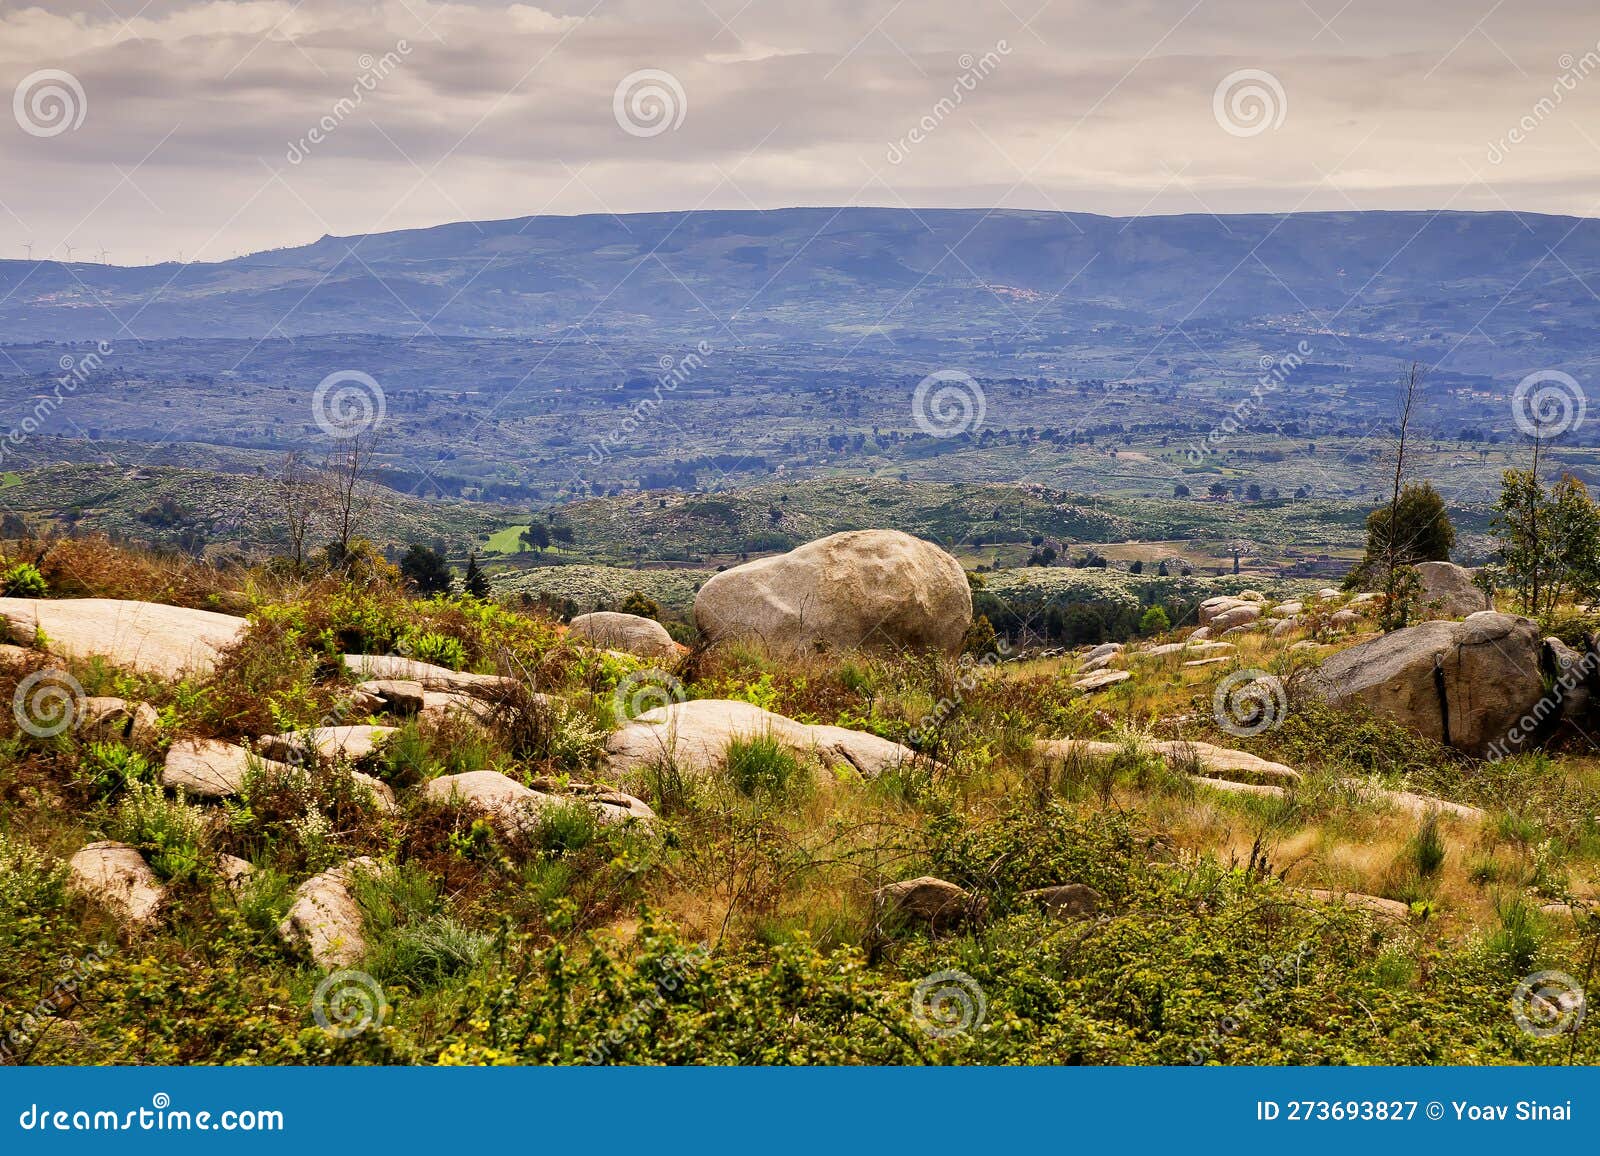 field of big stones landscape north of vila mendo de tavares portugal